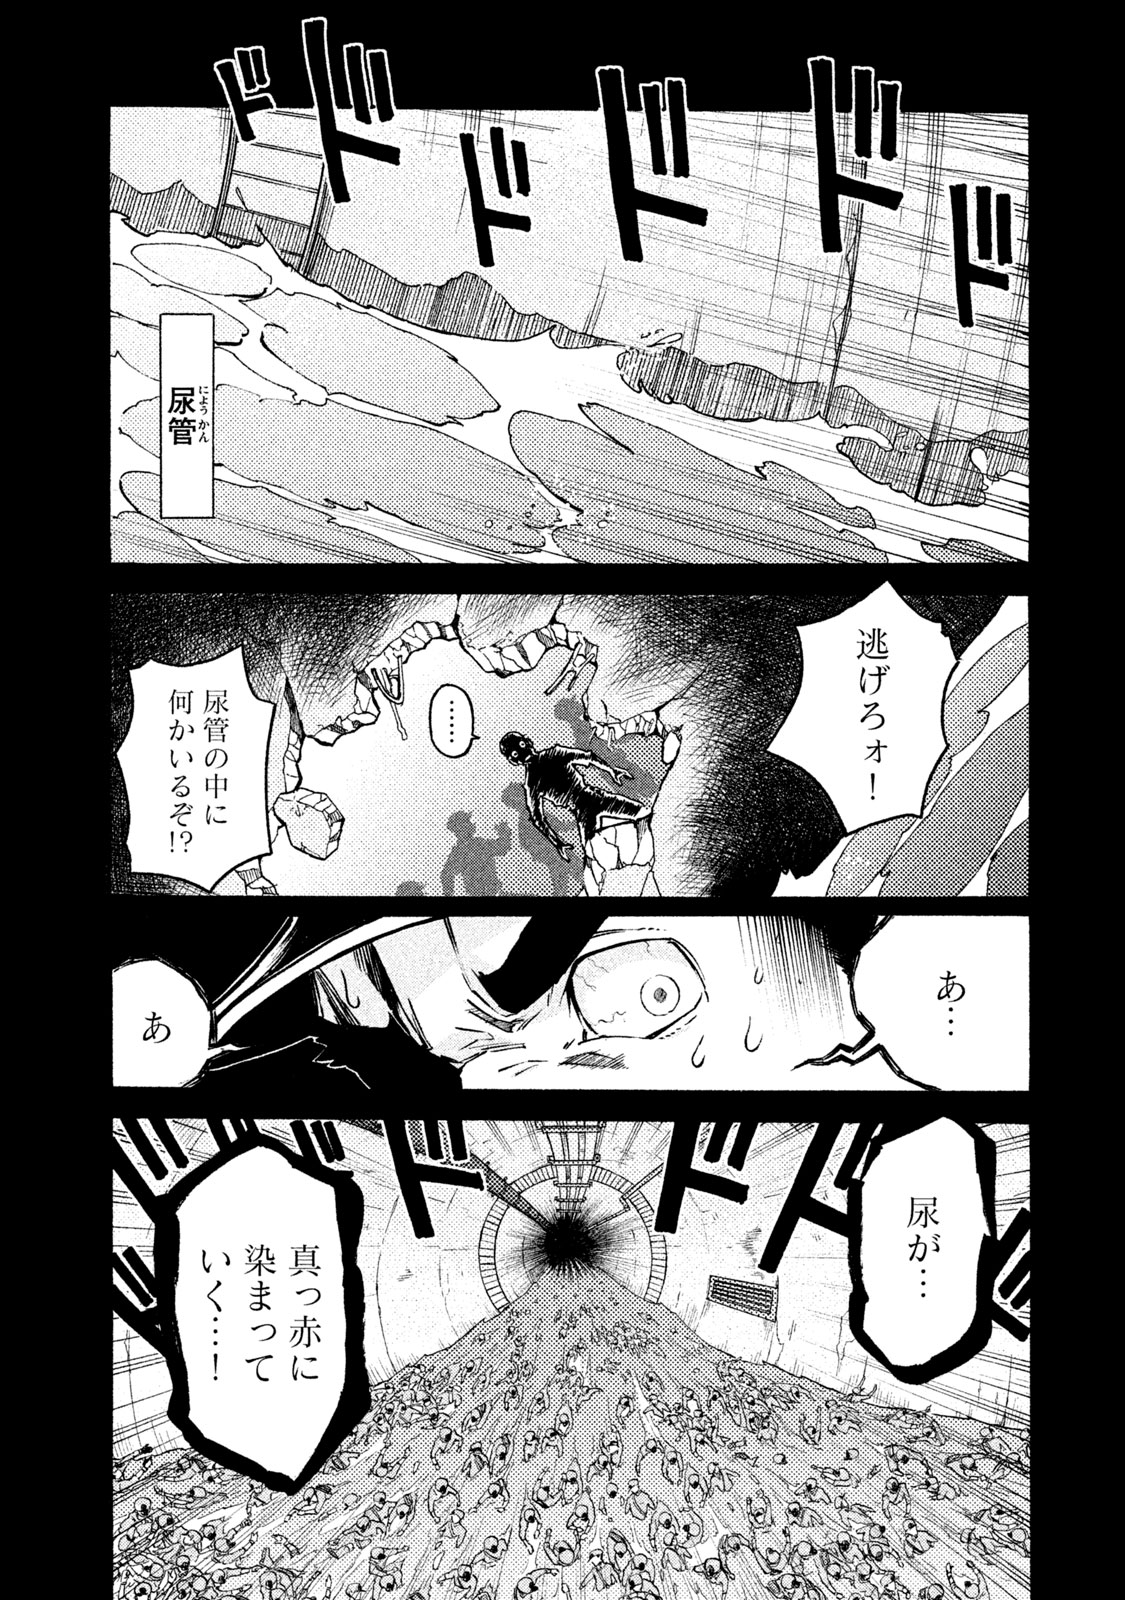 Hataraku Saibou BLACK - Chapter 13 - Page 2